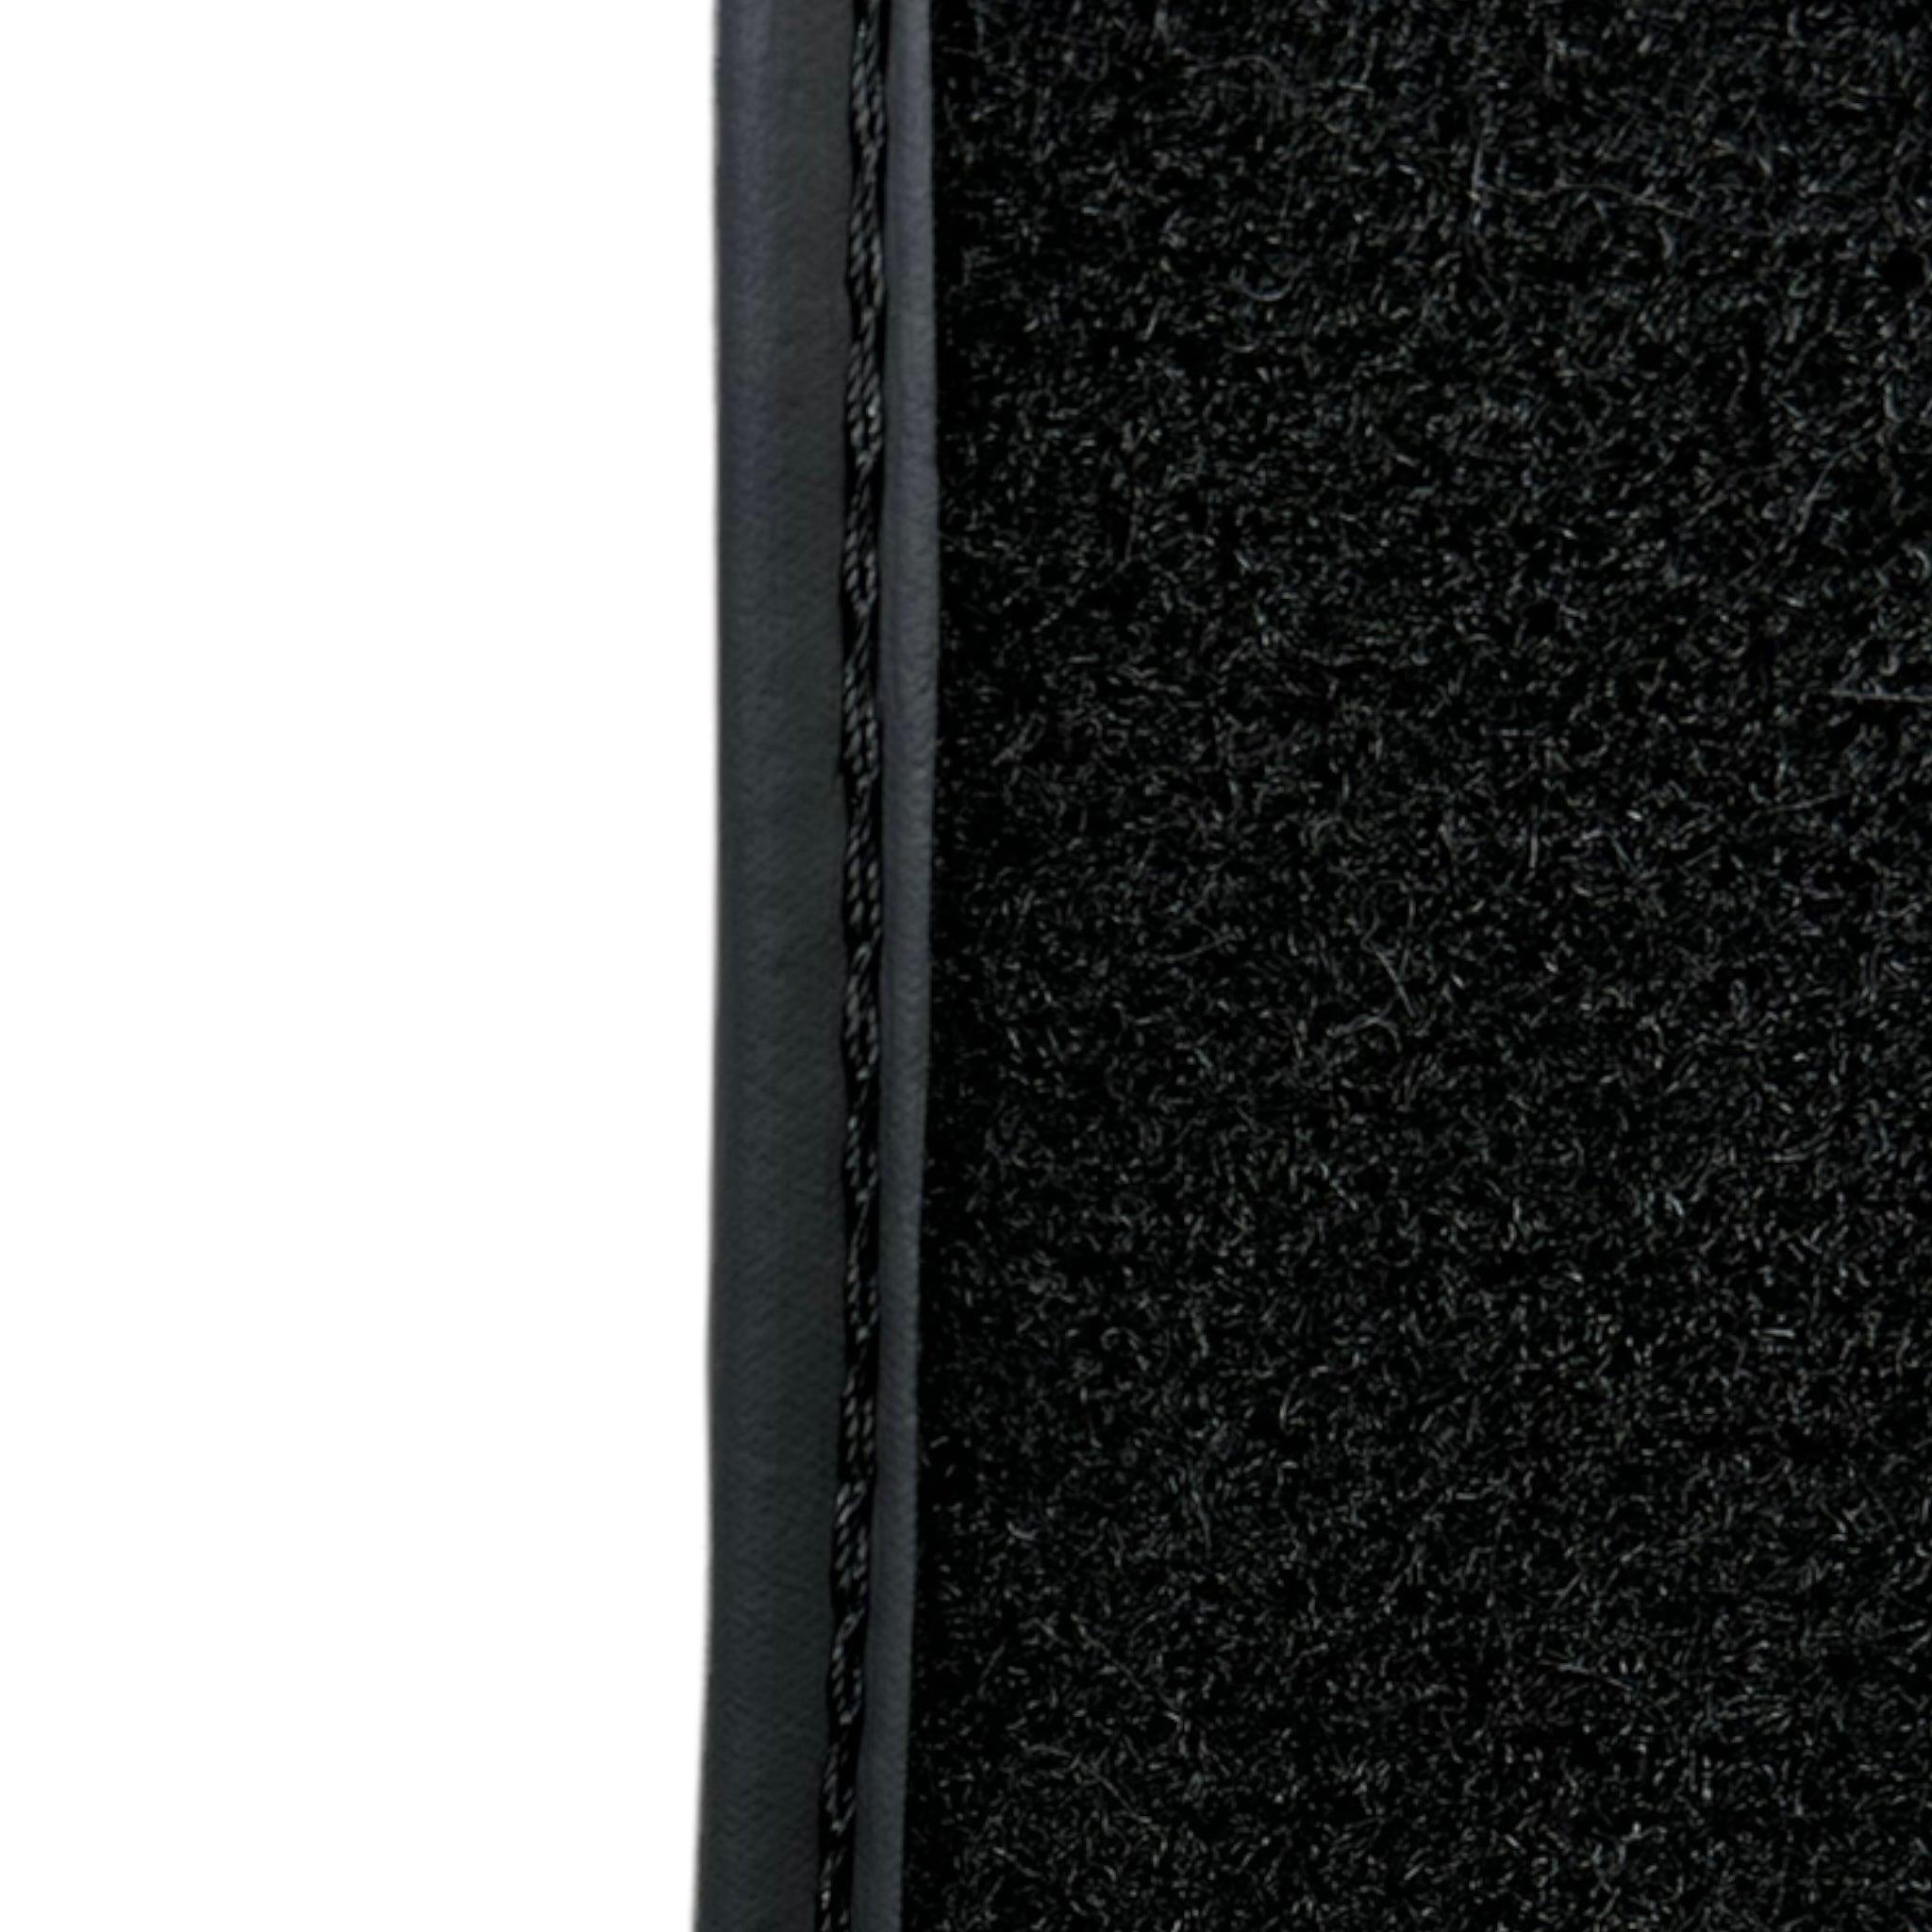 Black Sheepskin Floor Mats For BMW X3 - E83 SUV ER56 Design